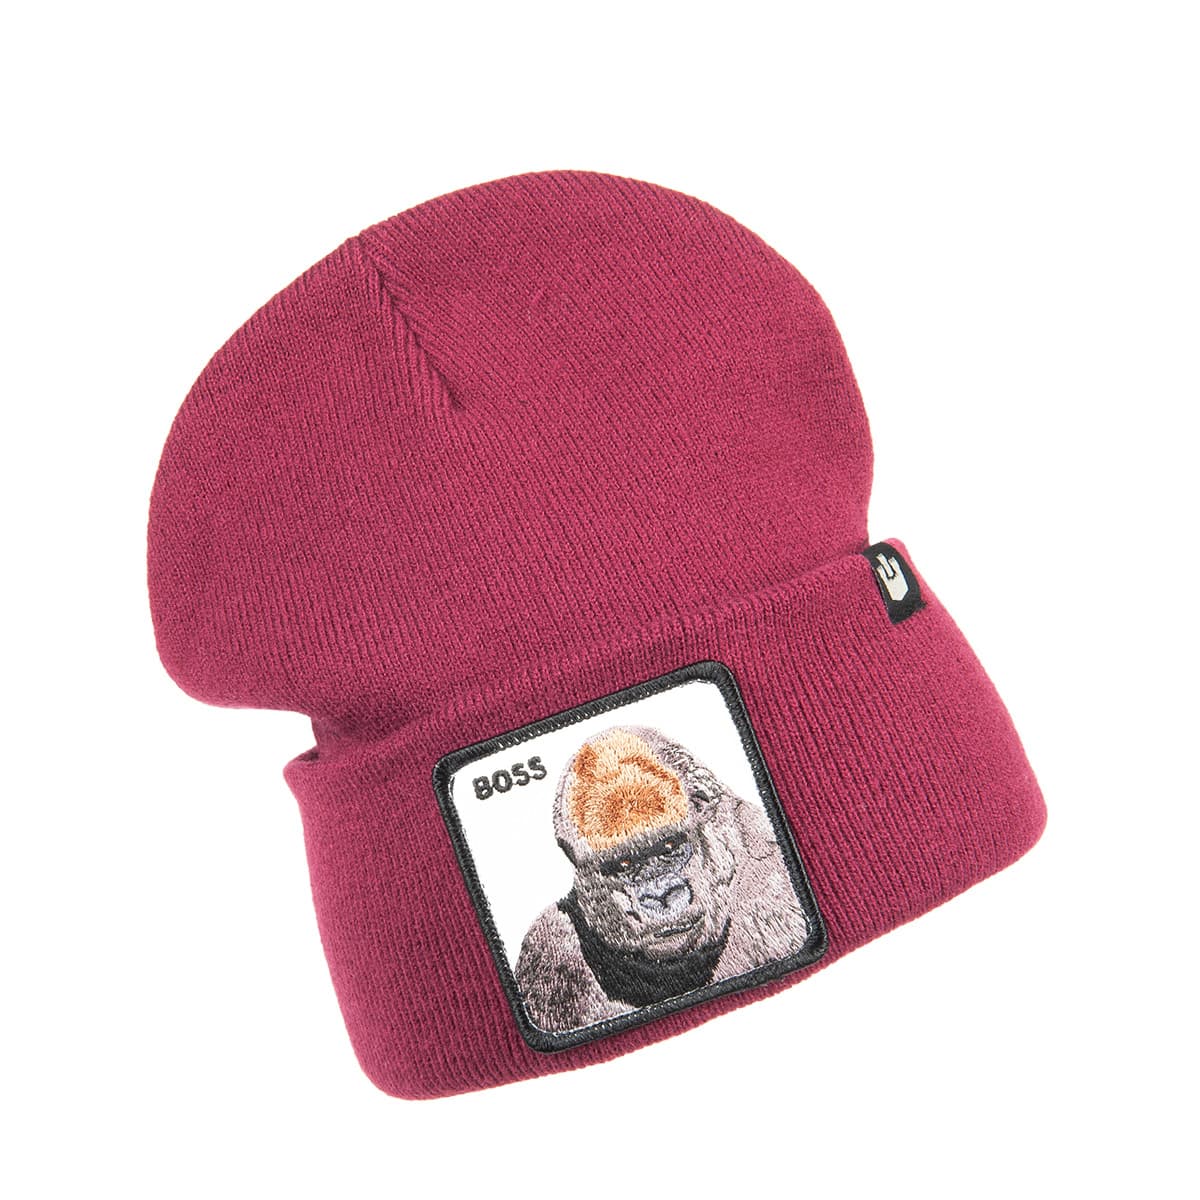 GOORIN | Motiv: Apes Knit Boss Beanie --> Hutstuebele - Hüte, Mützen,  Handschuhe, Schals sowie kuschelig warme